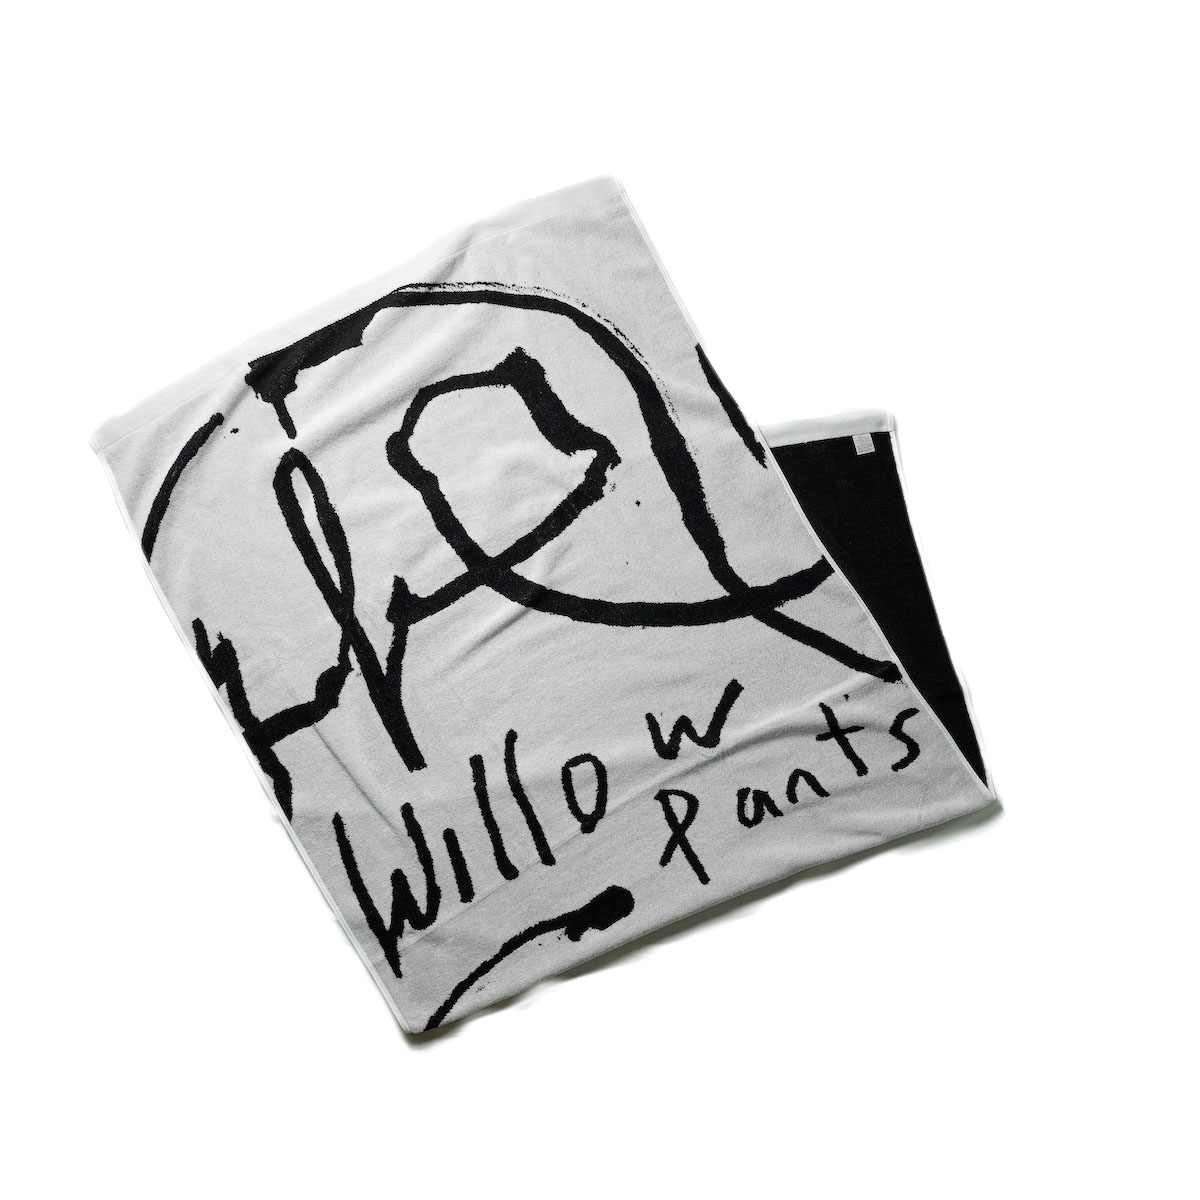 Willow Pants / W-003 Beach Towel